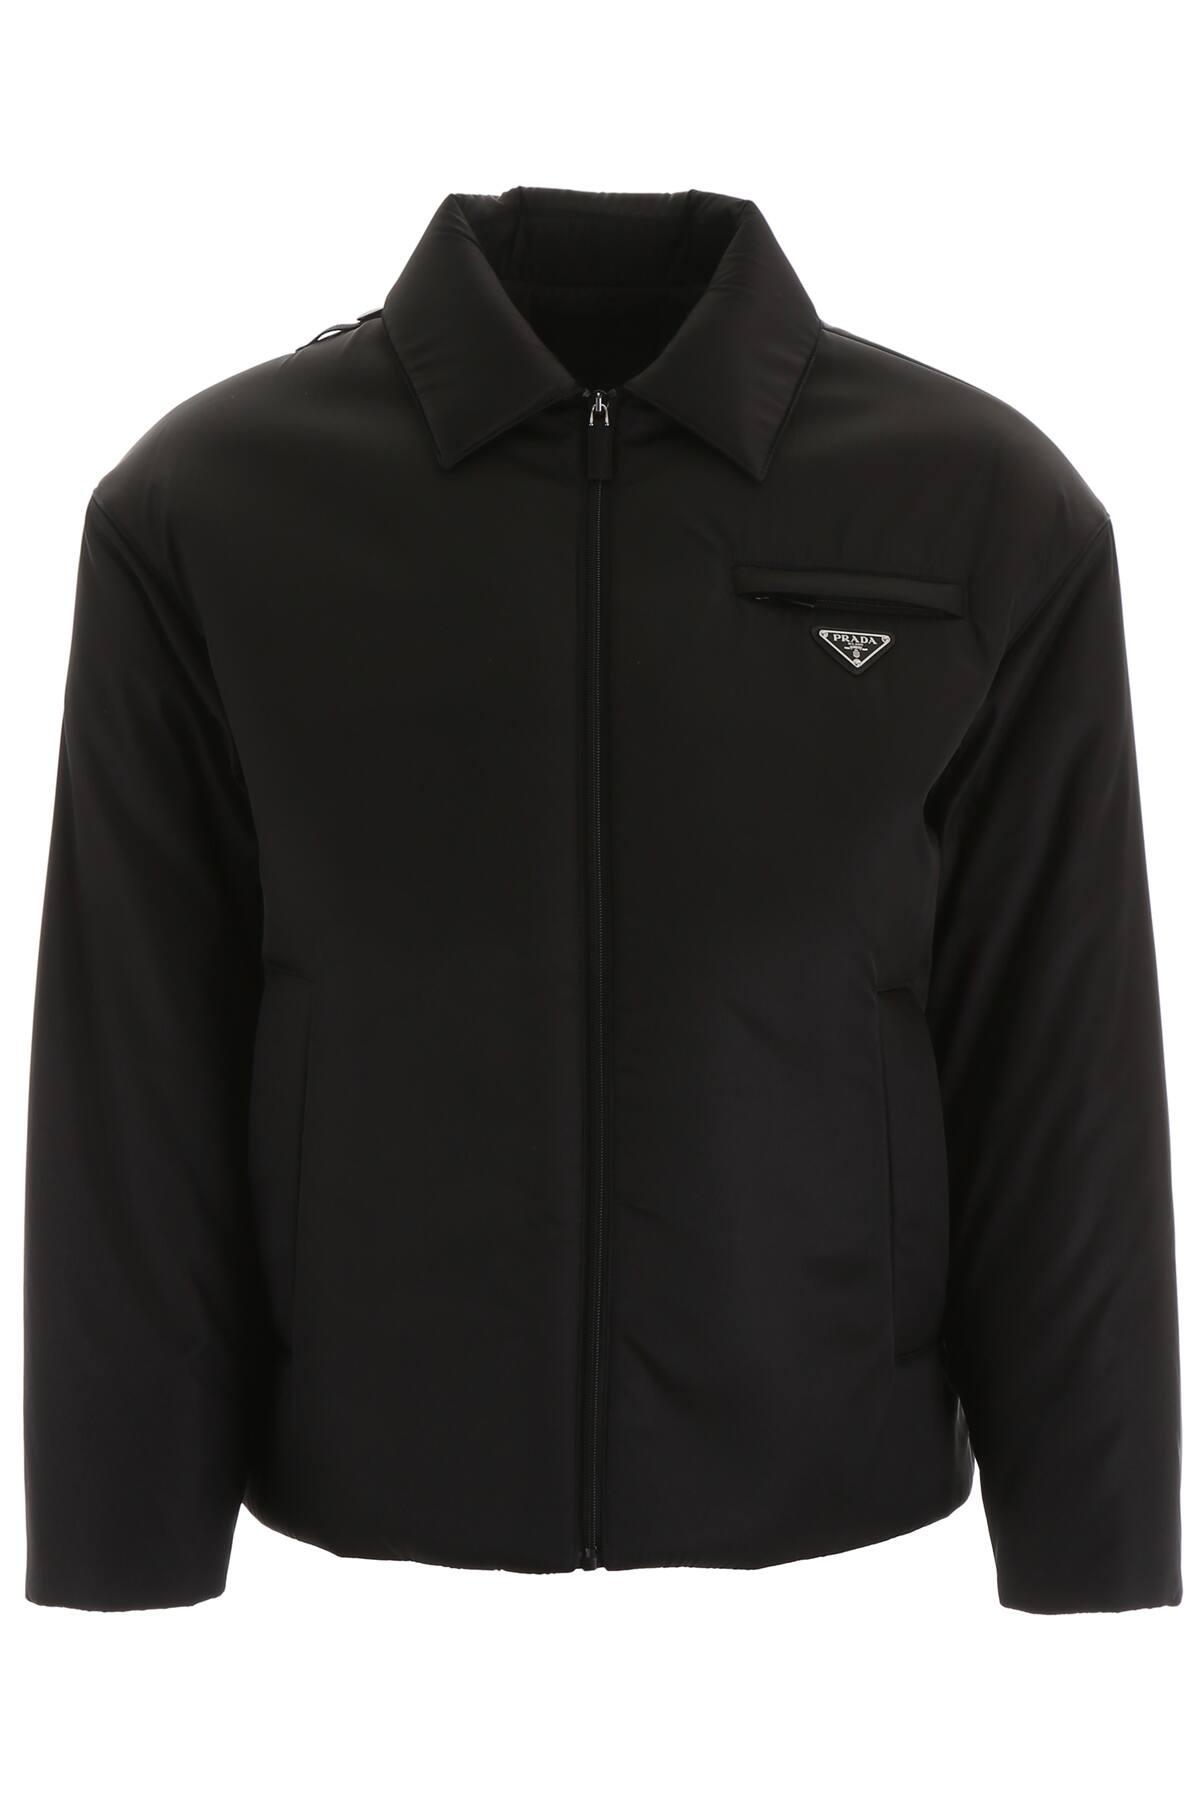 Prada Synthetic Padded Jacket in Black for Men - Lyst